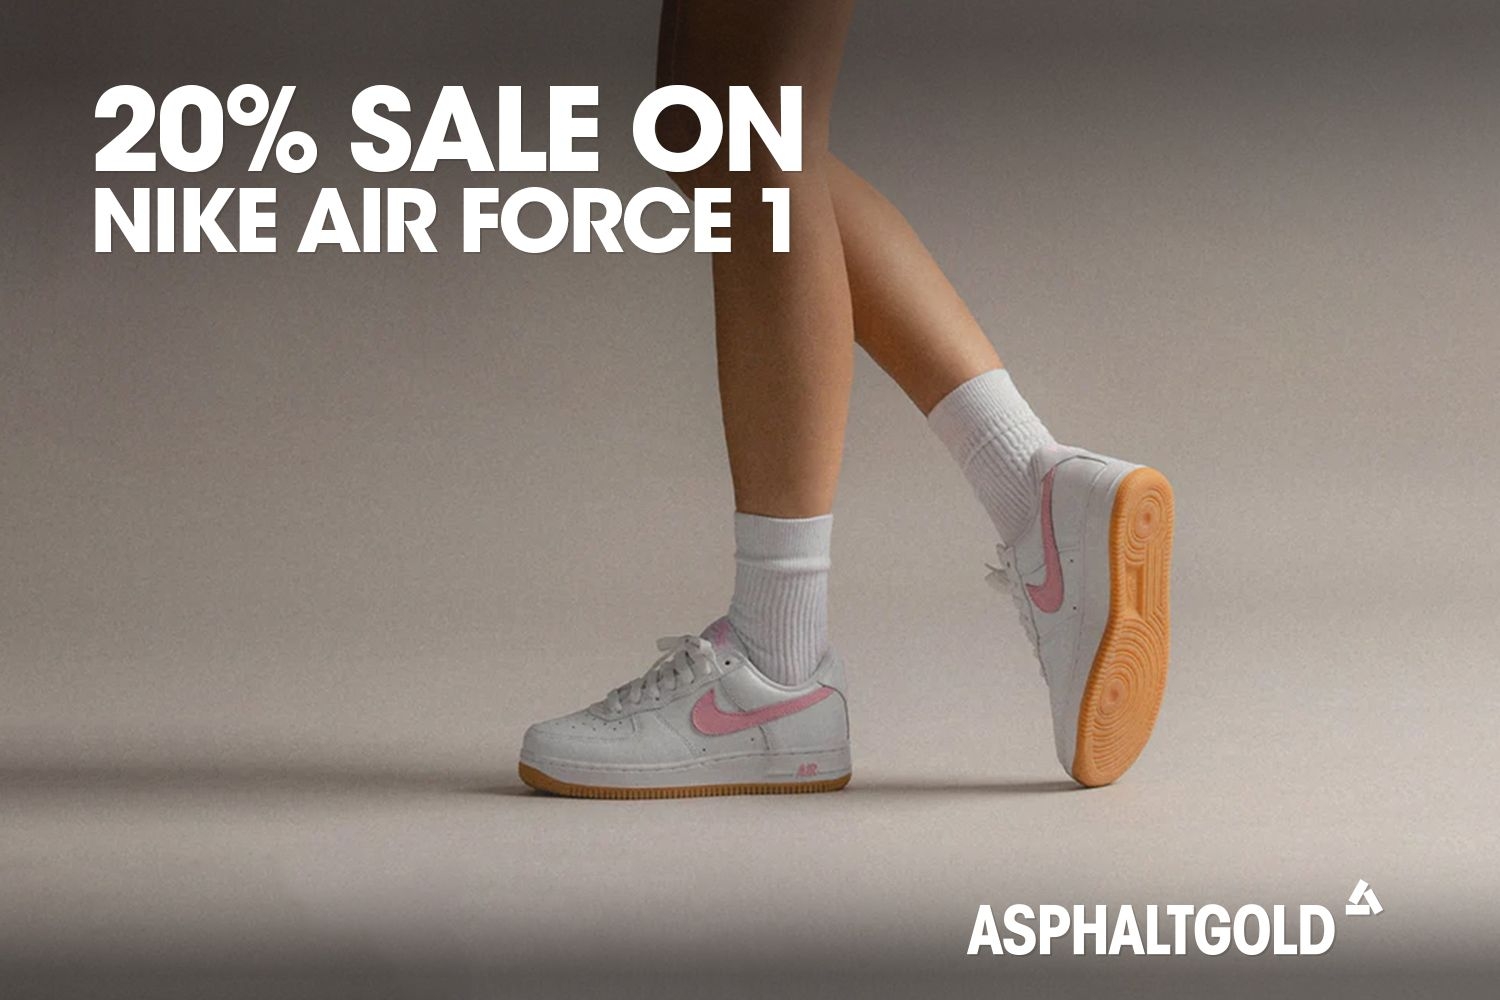 20% off Nike Air Force 1's at Asphaltgold